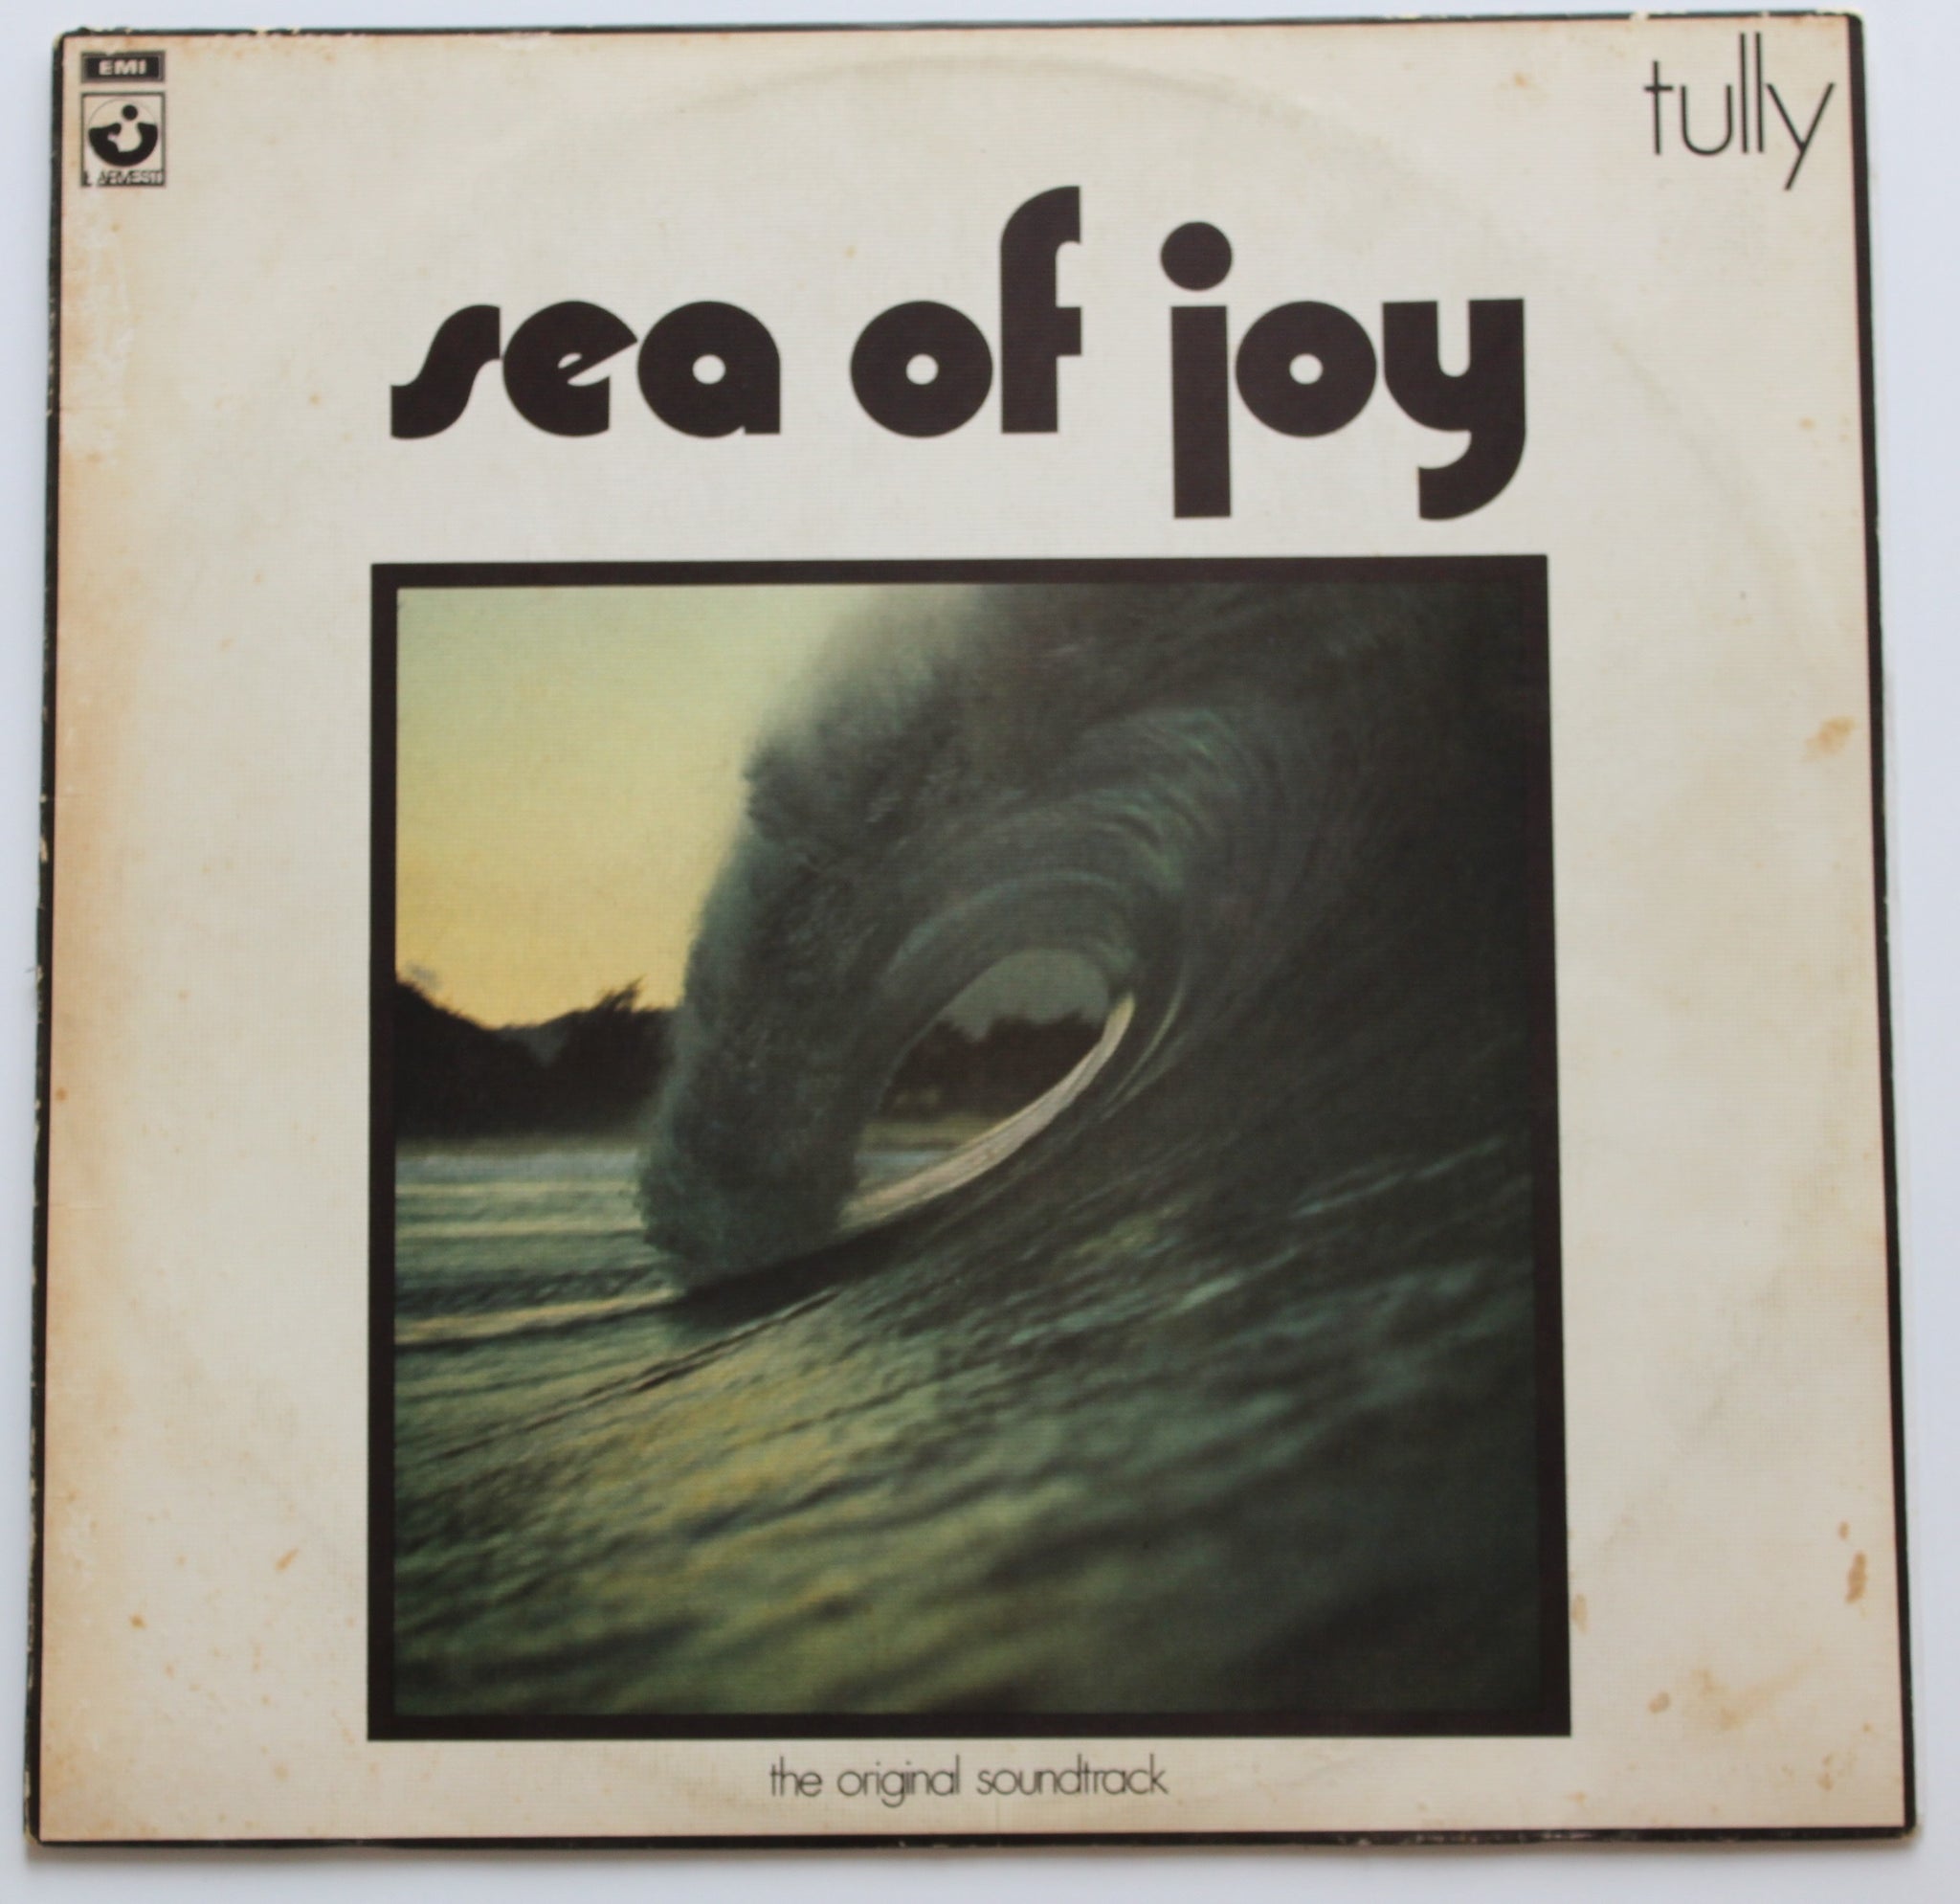 Sea of Joy Soundtrack Album.